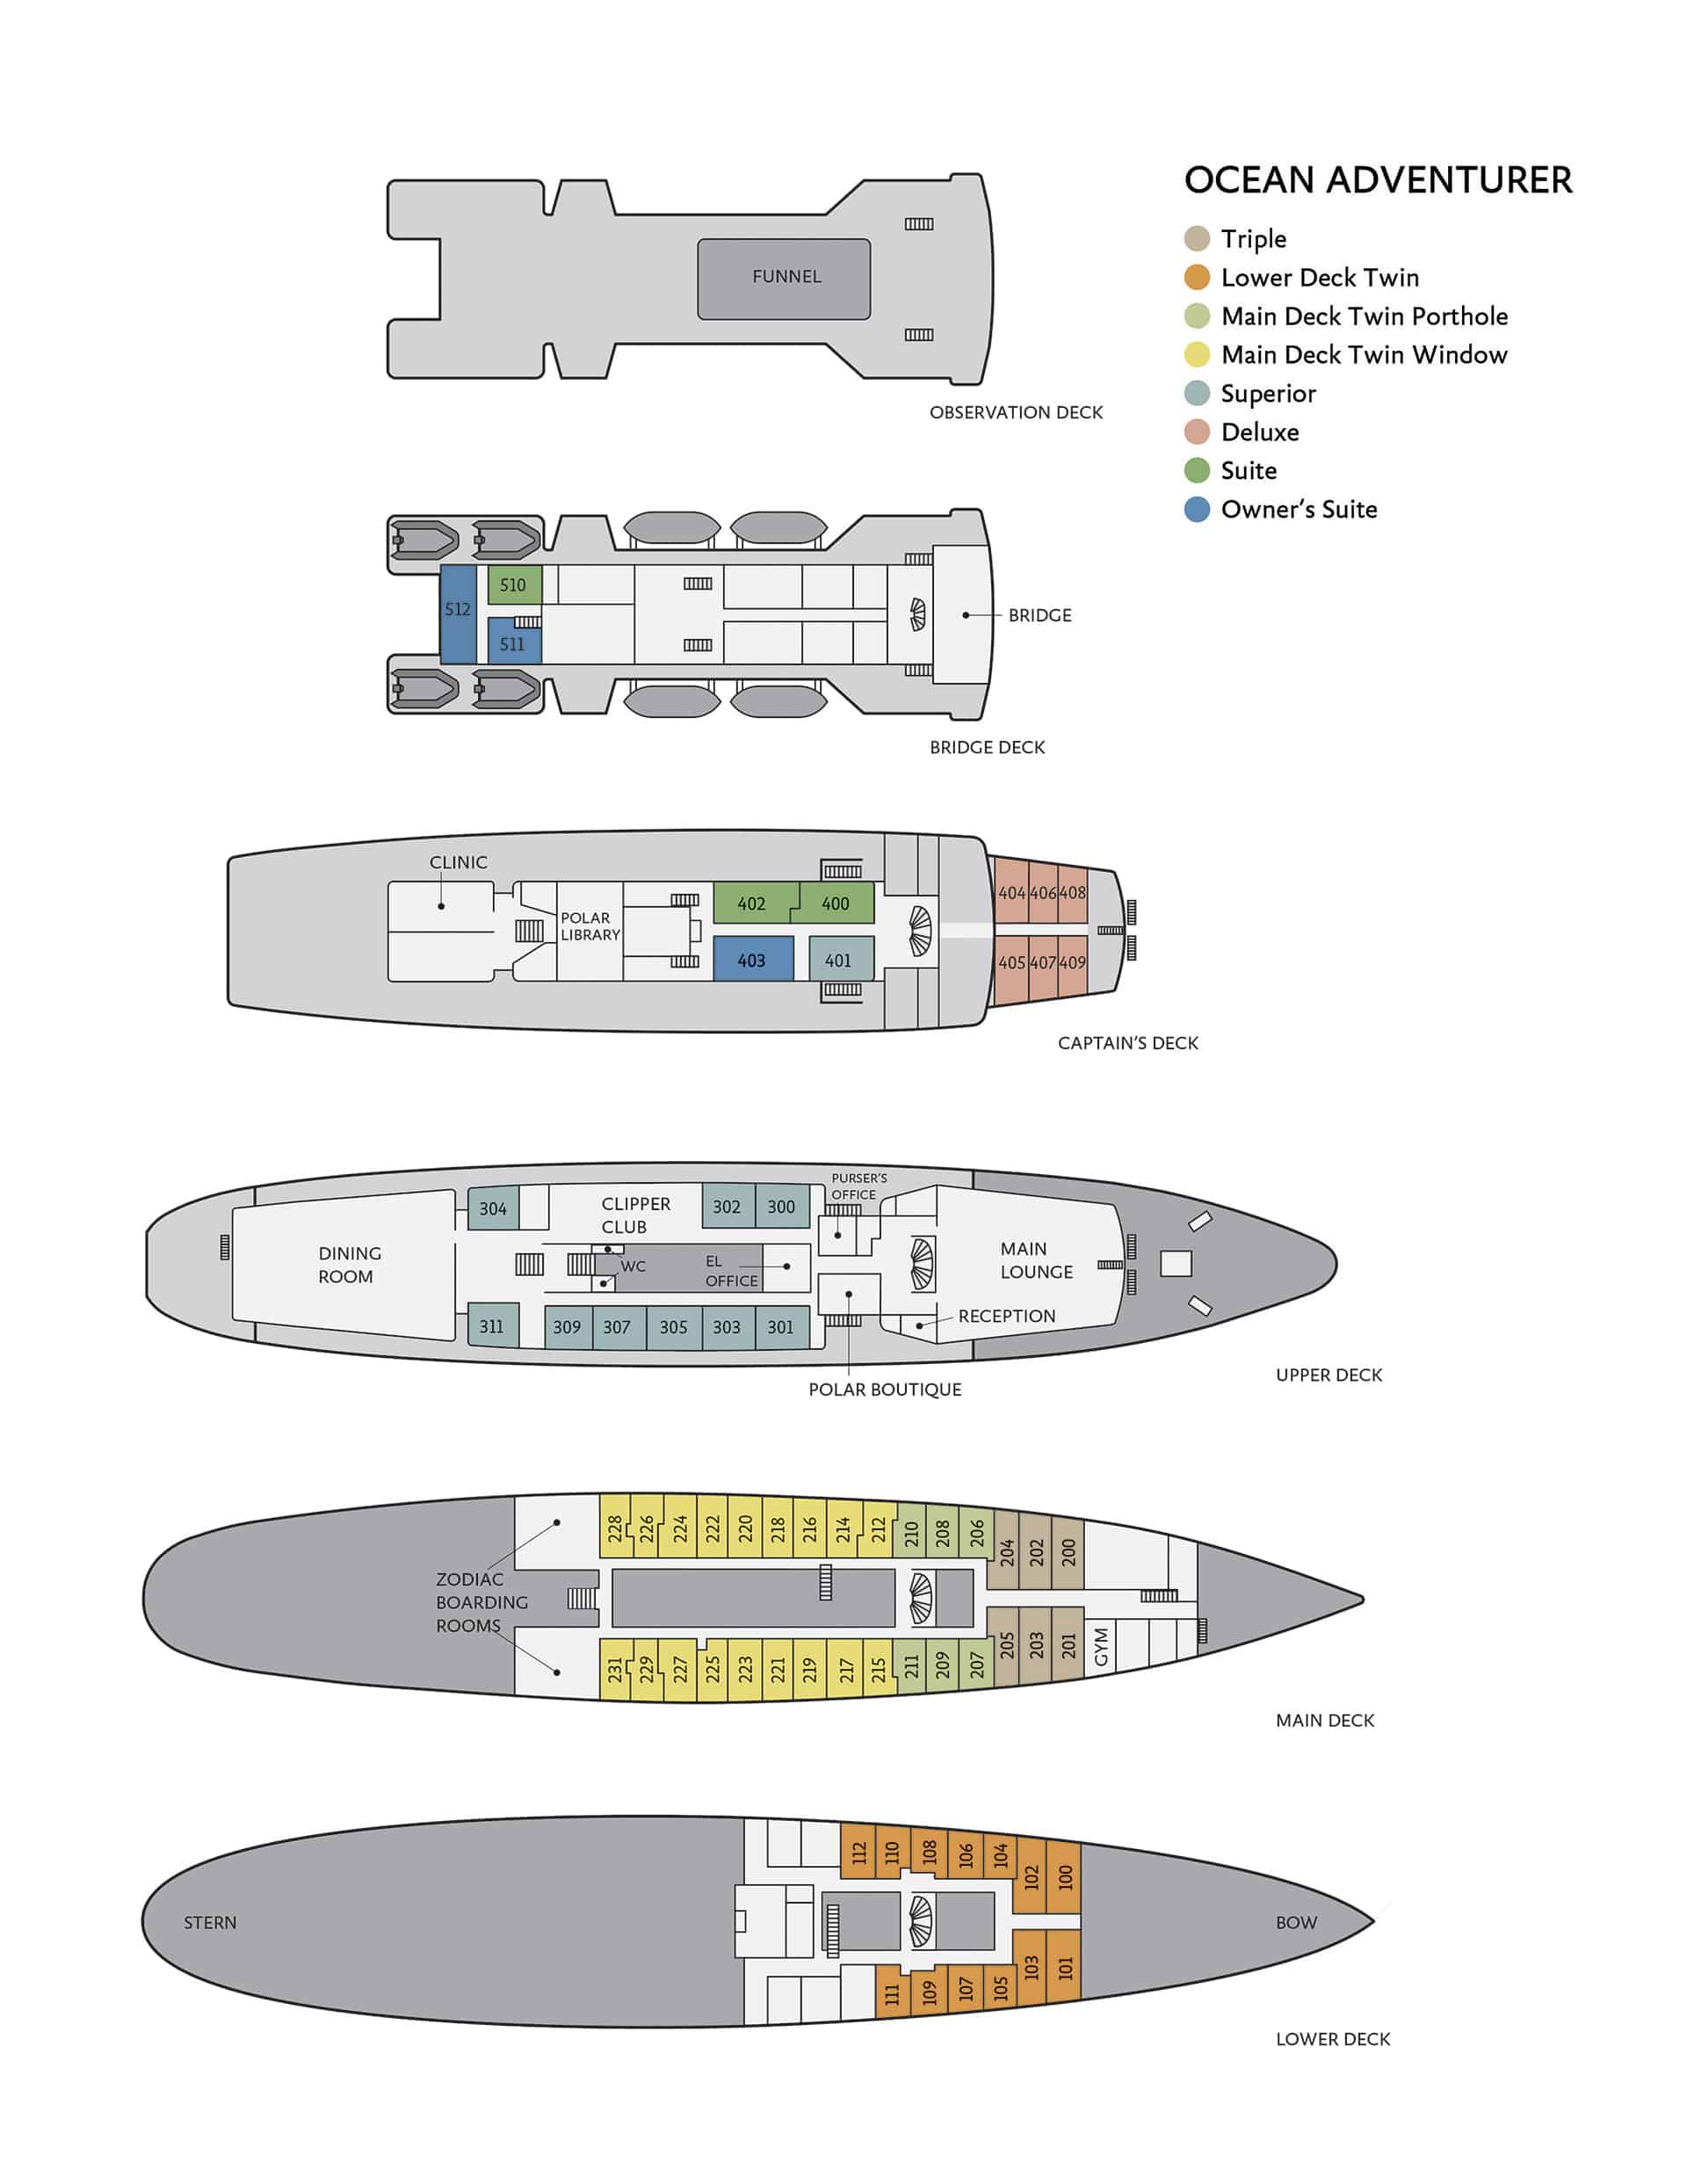 deck plan for the ocean adventurer small ship